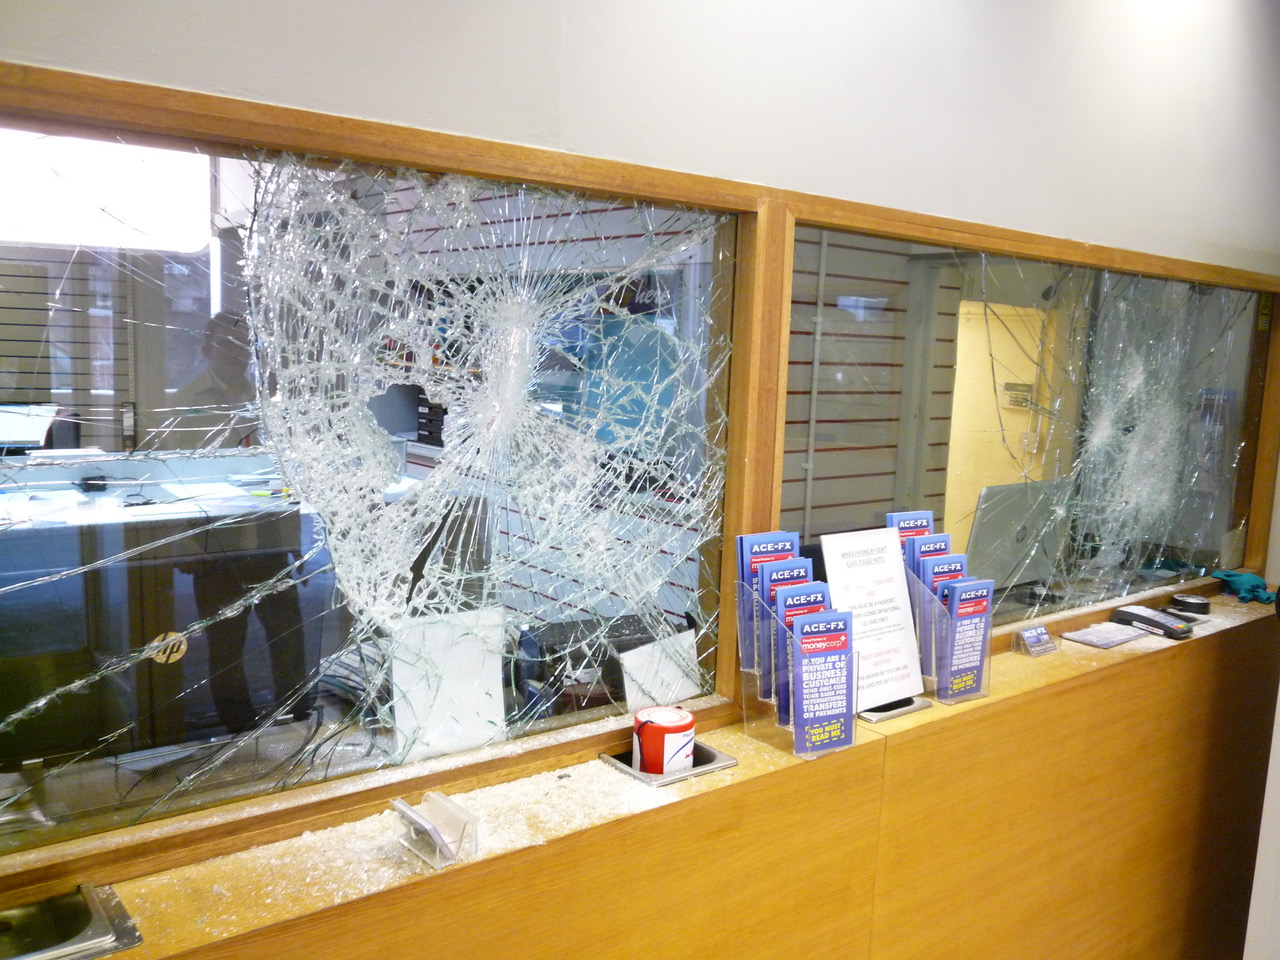 Bureau de Change London Attacked Glass